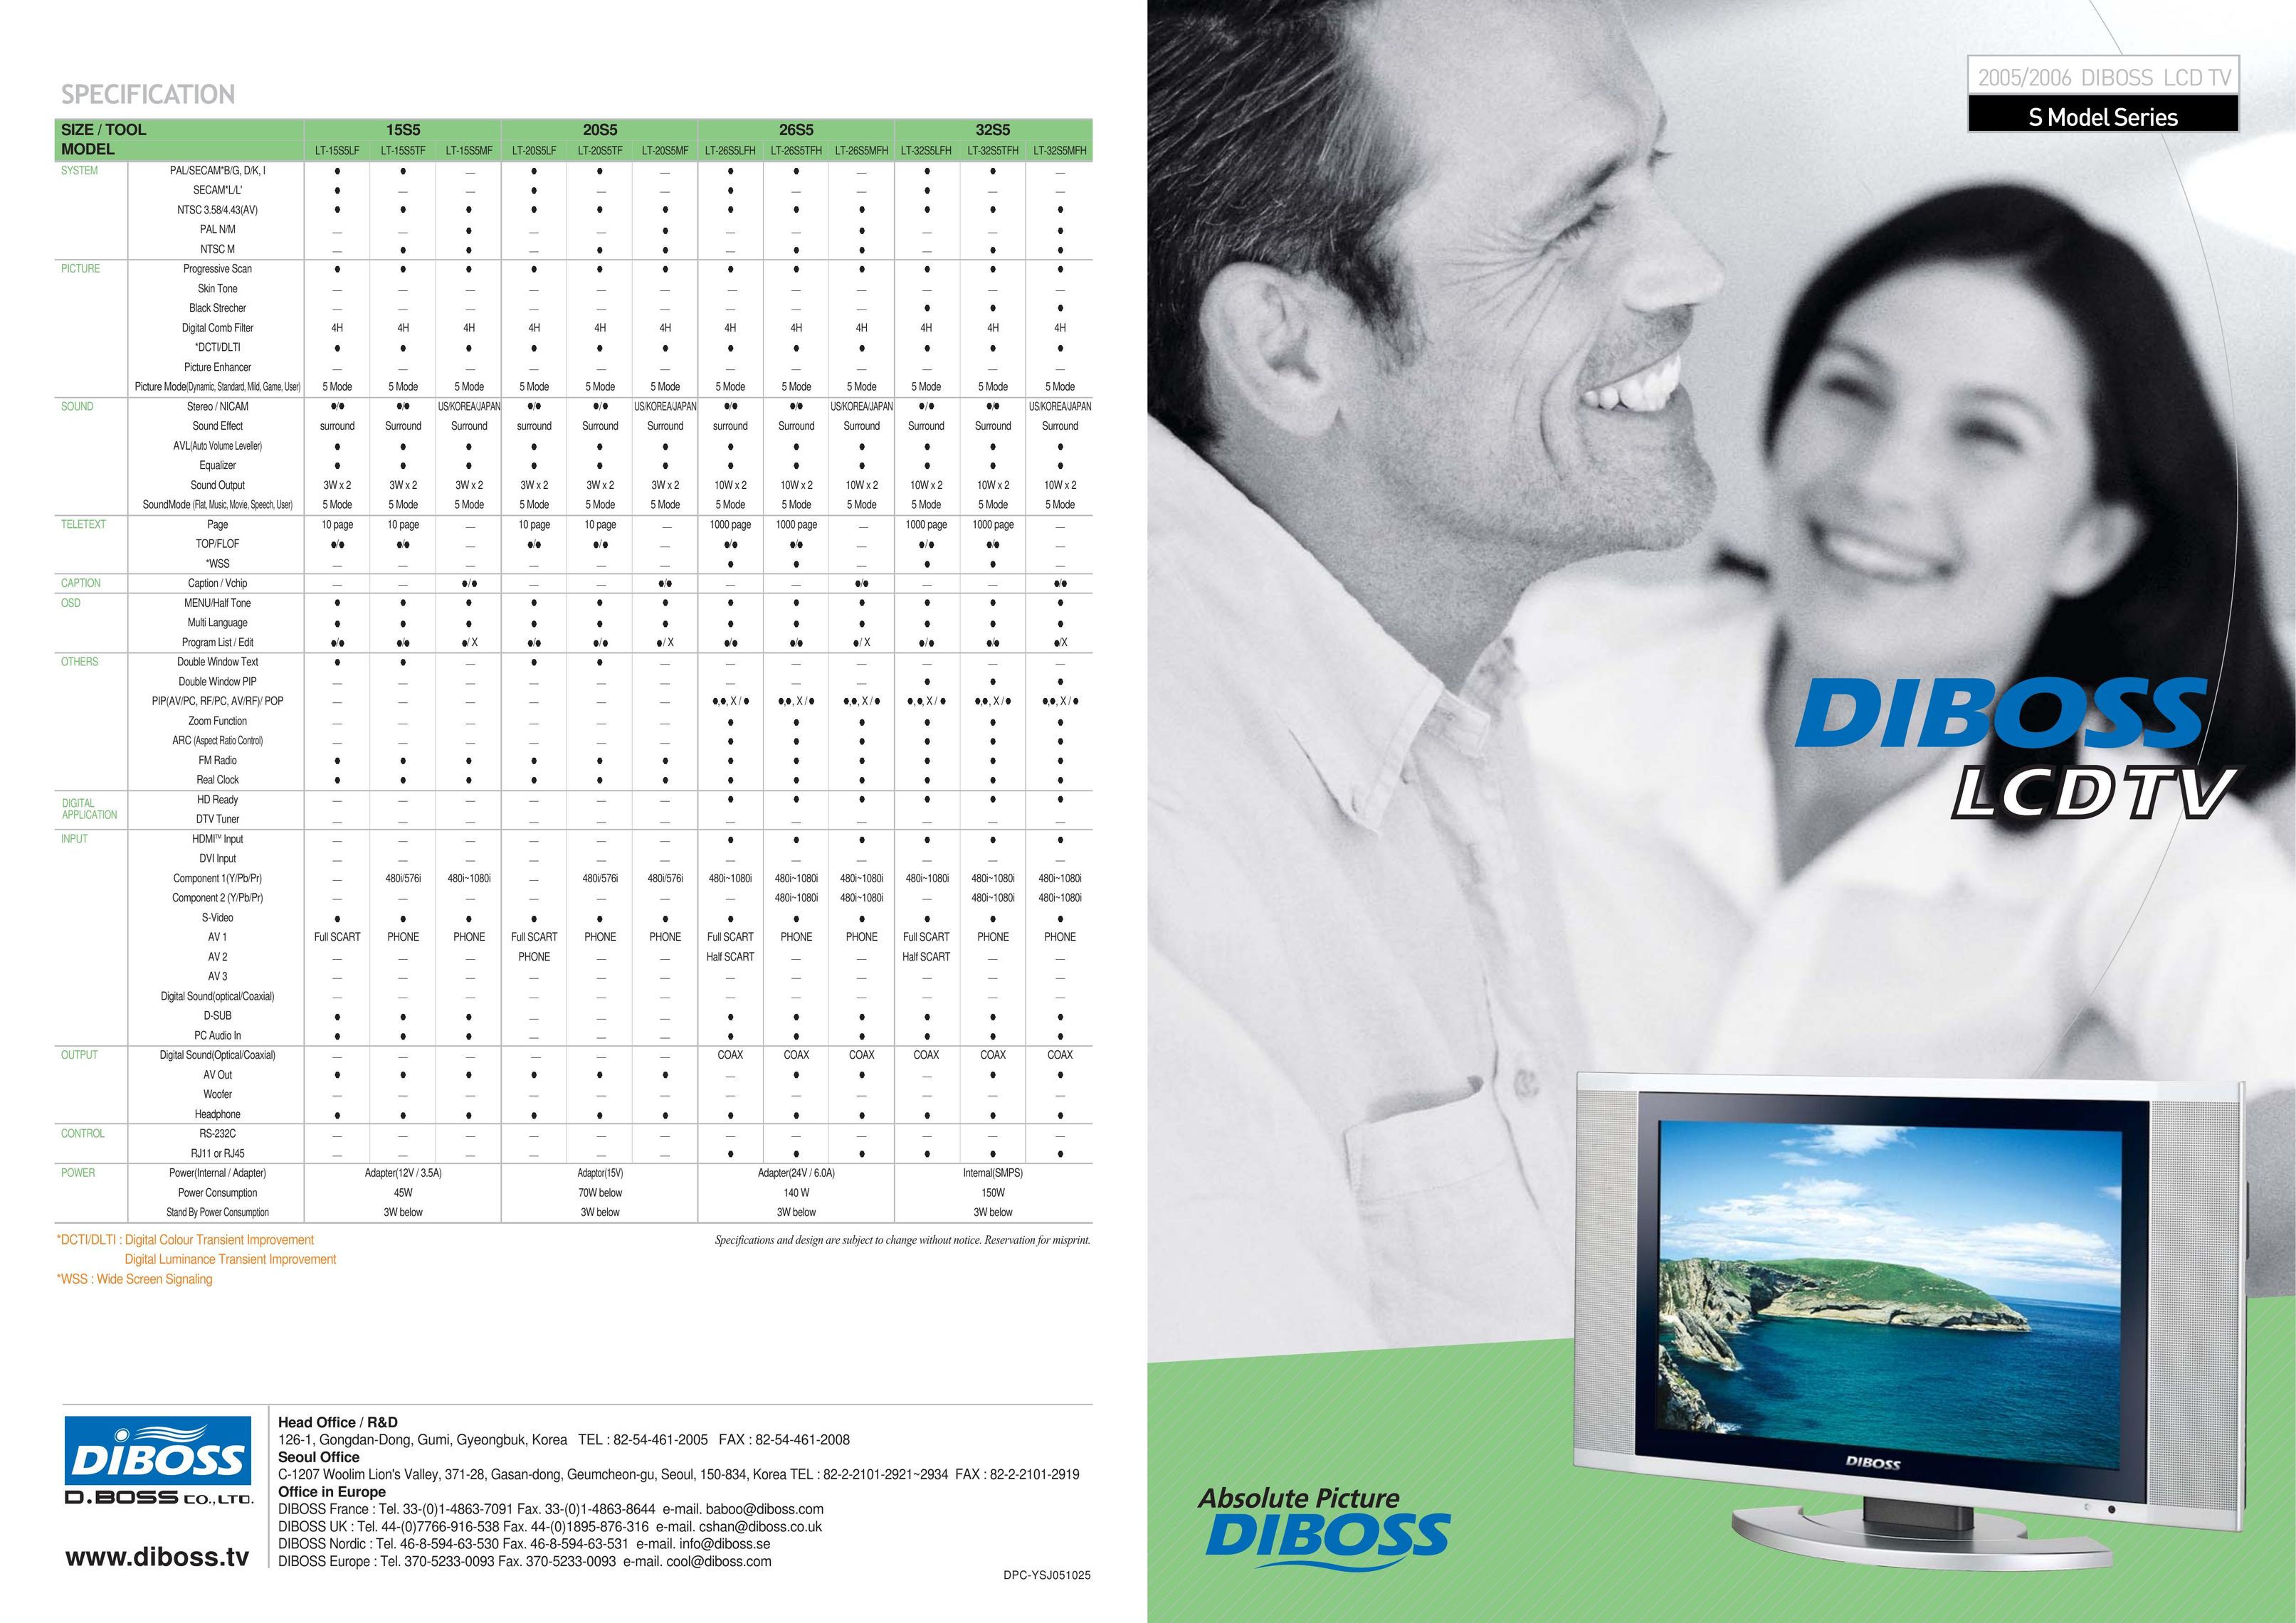 DiBoss S Model Flat Panel Television User Manual